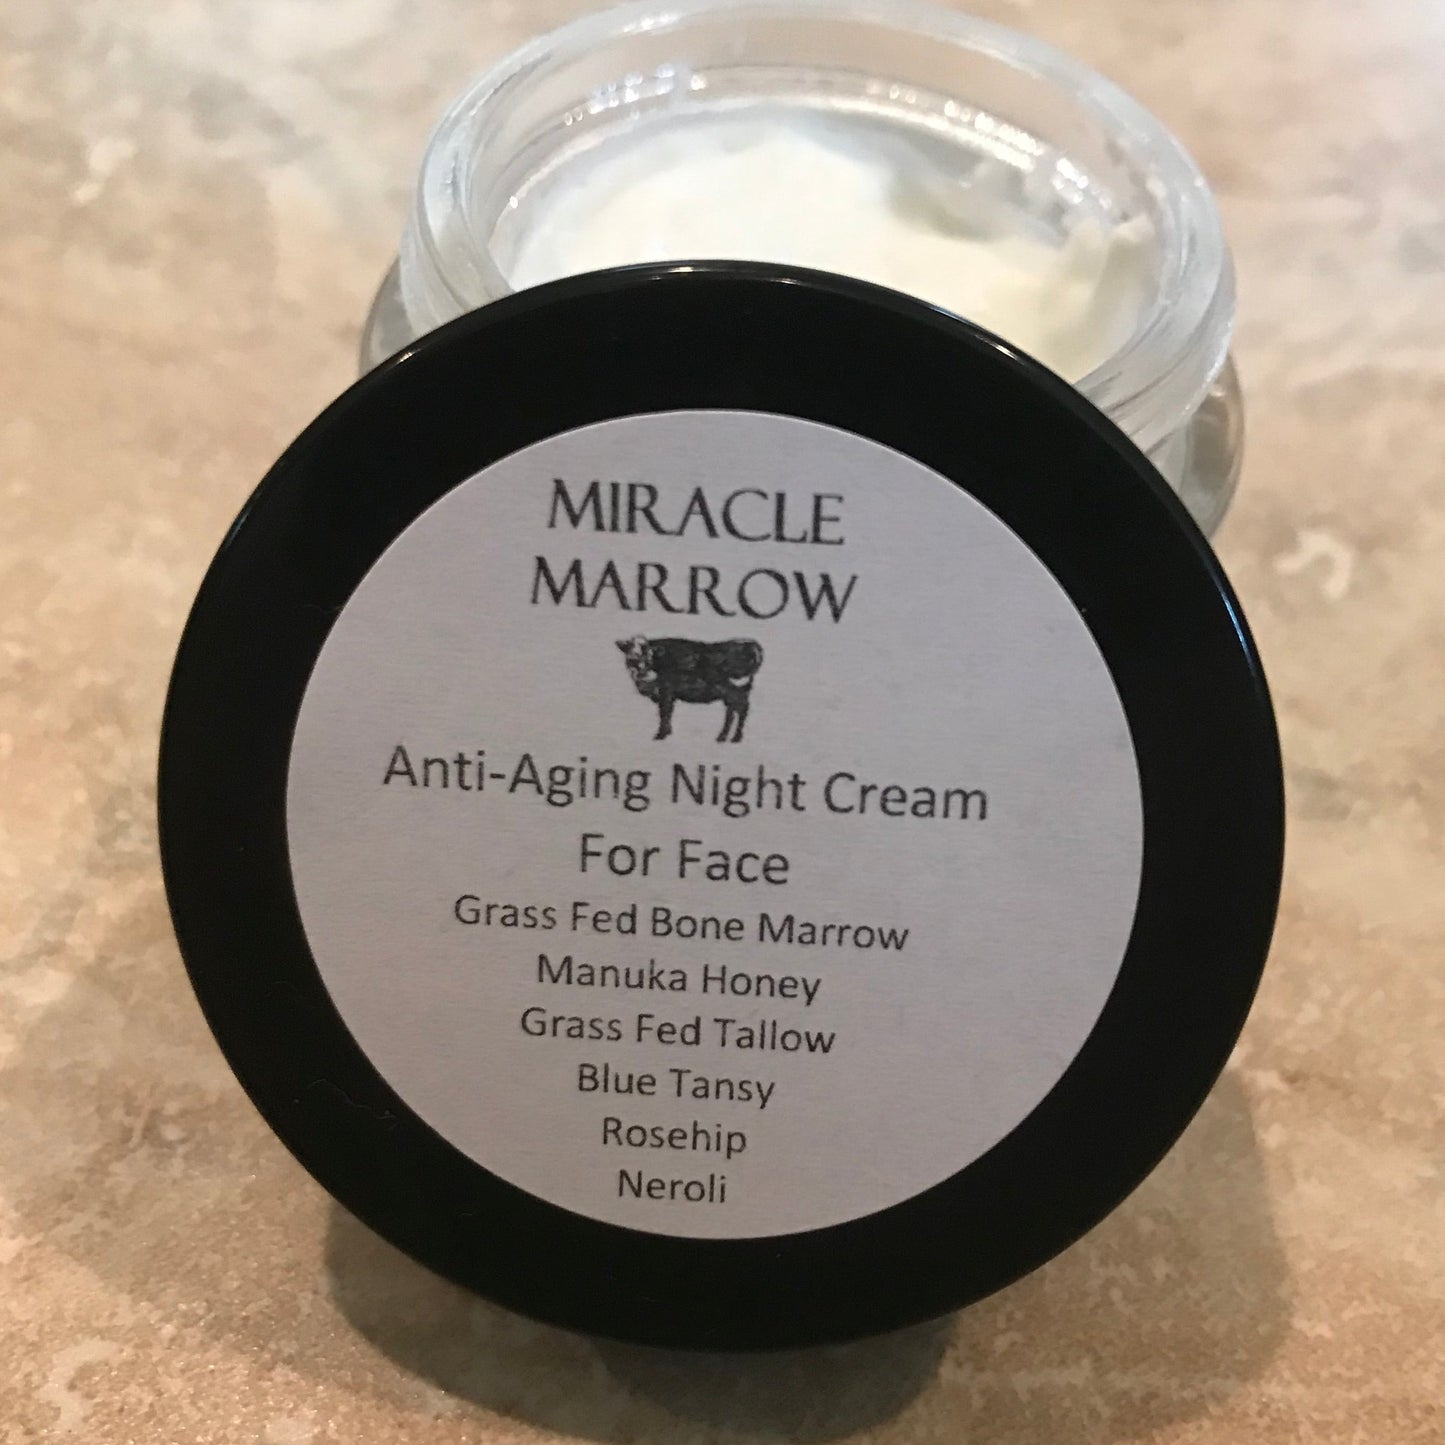 Anti-Aging Night Cream For Face